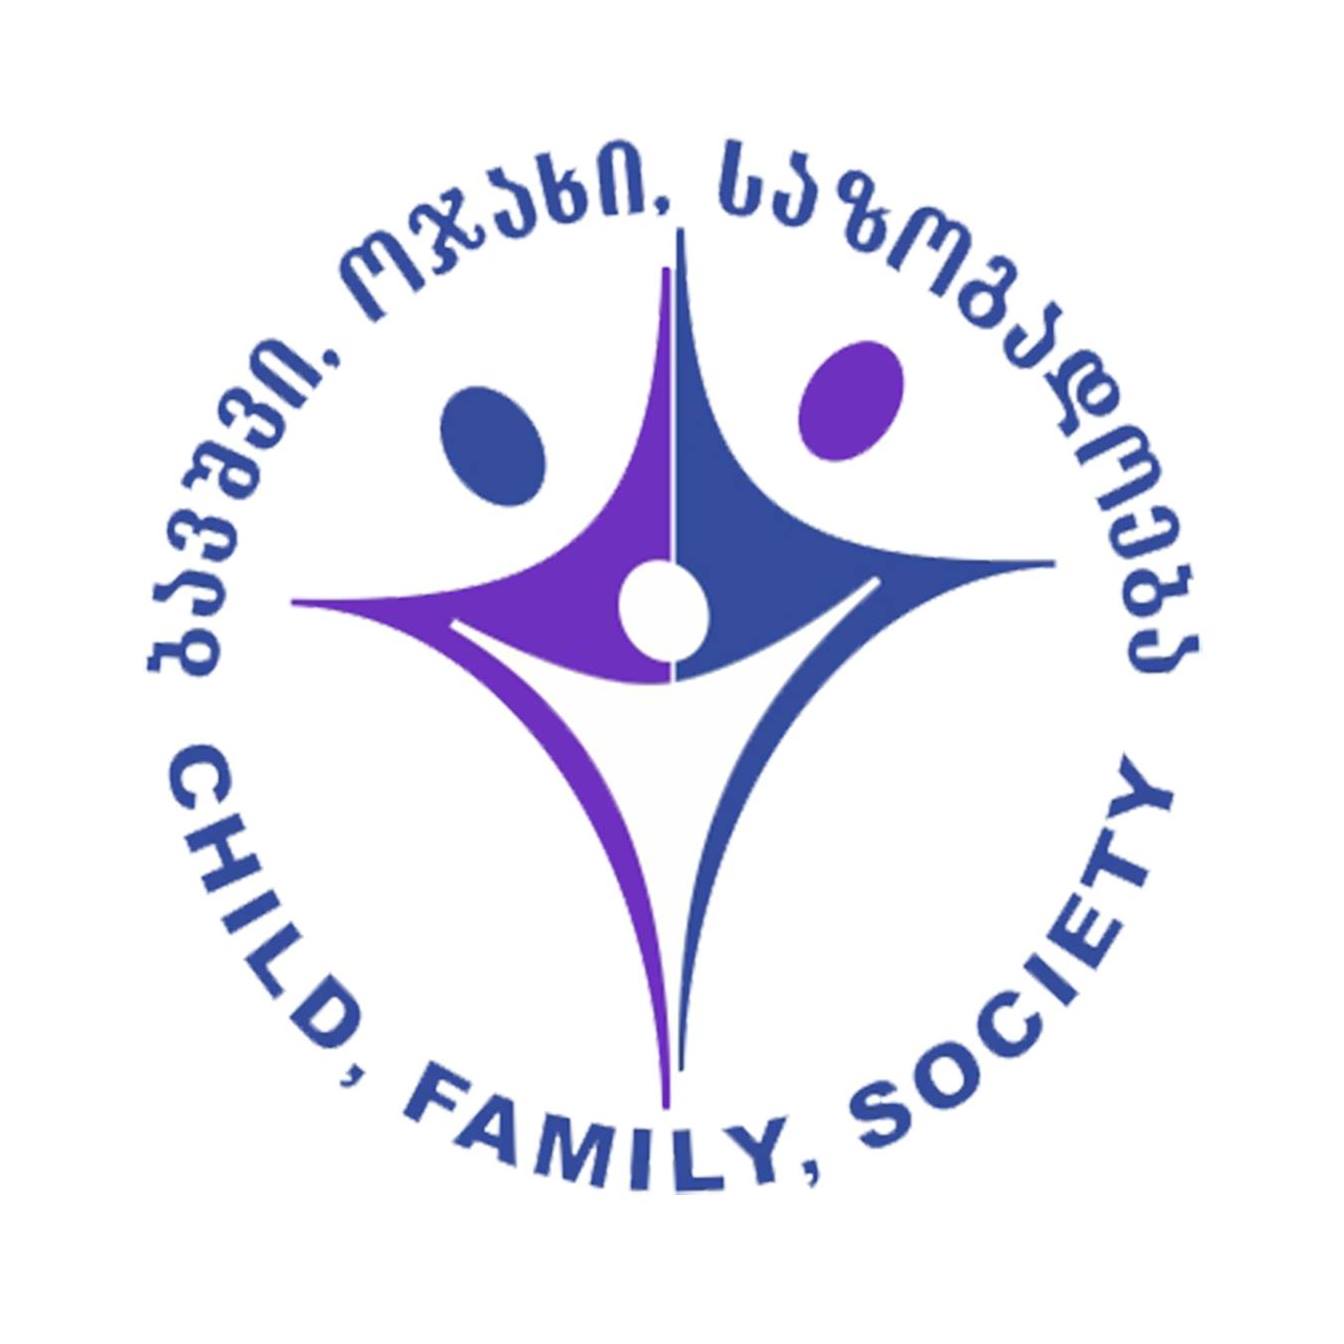 Child, Family, Society